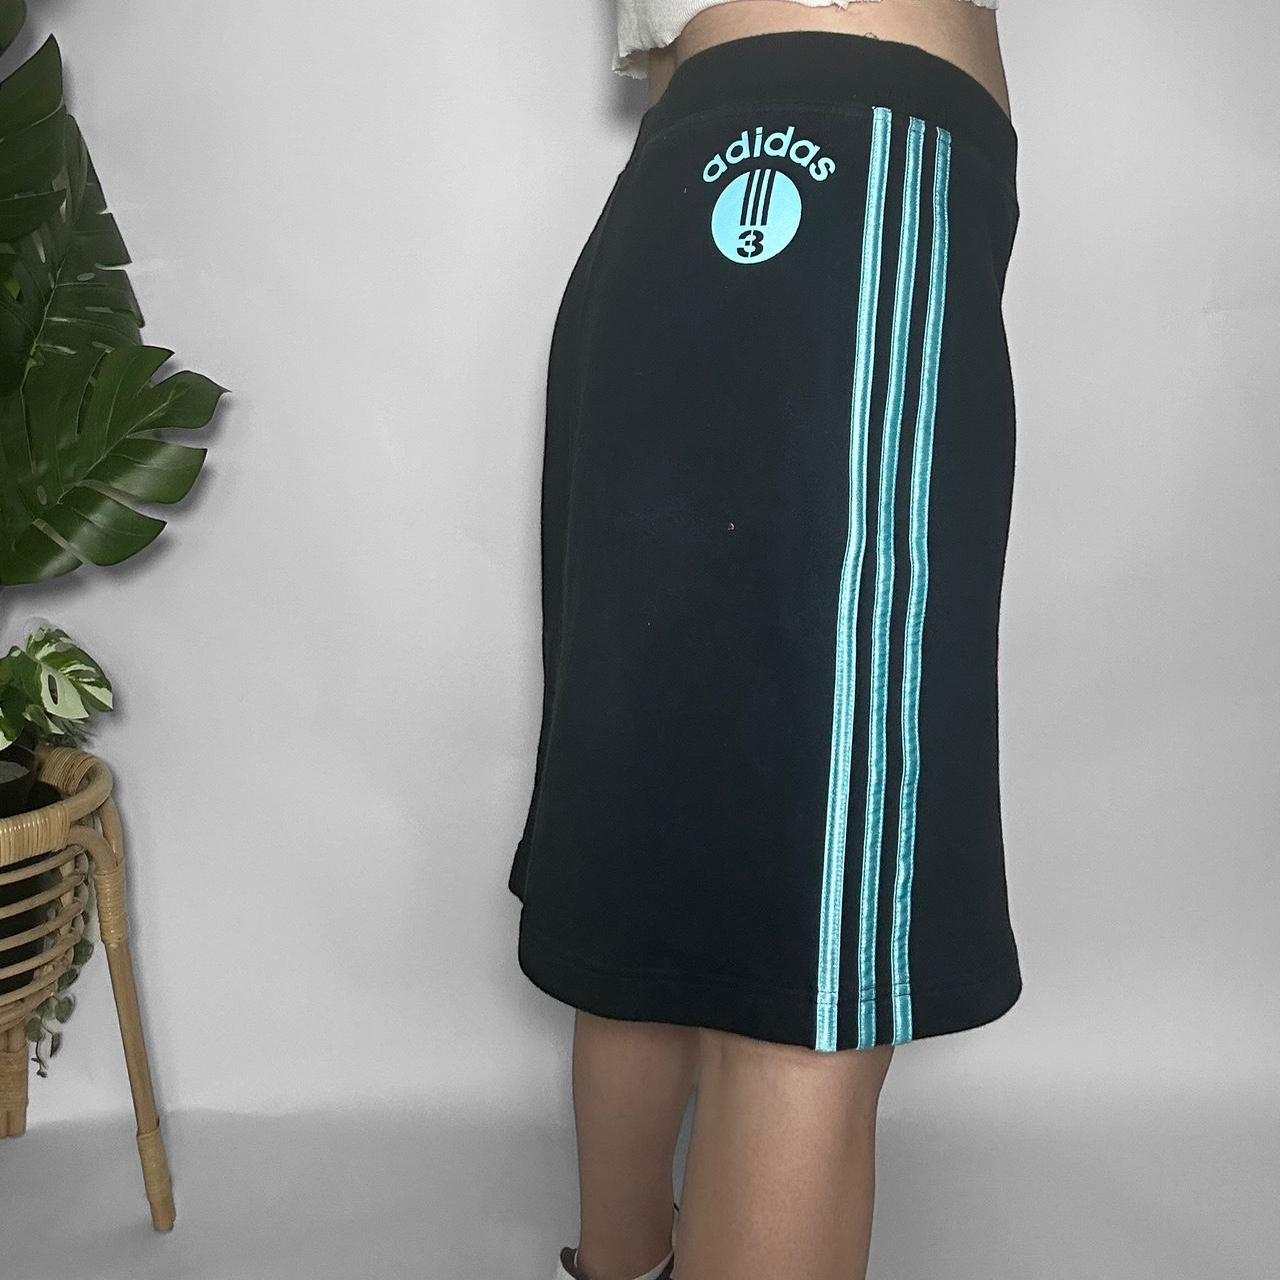 Vintage Adidas y2k knee length skirt in aqua blue and navy